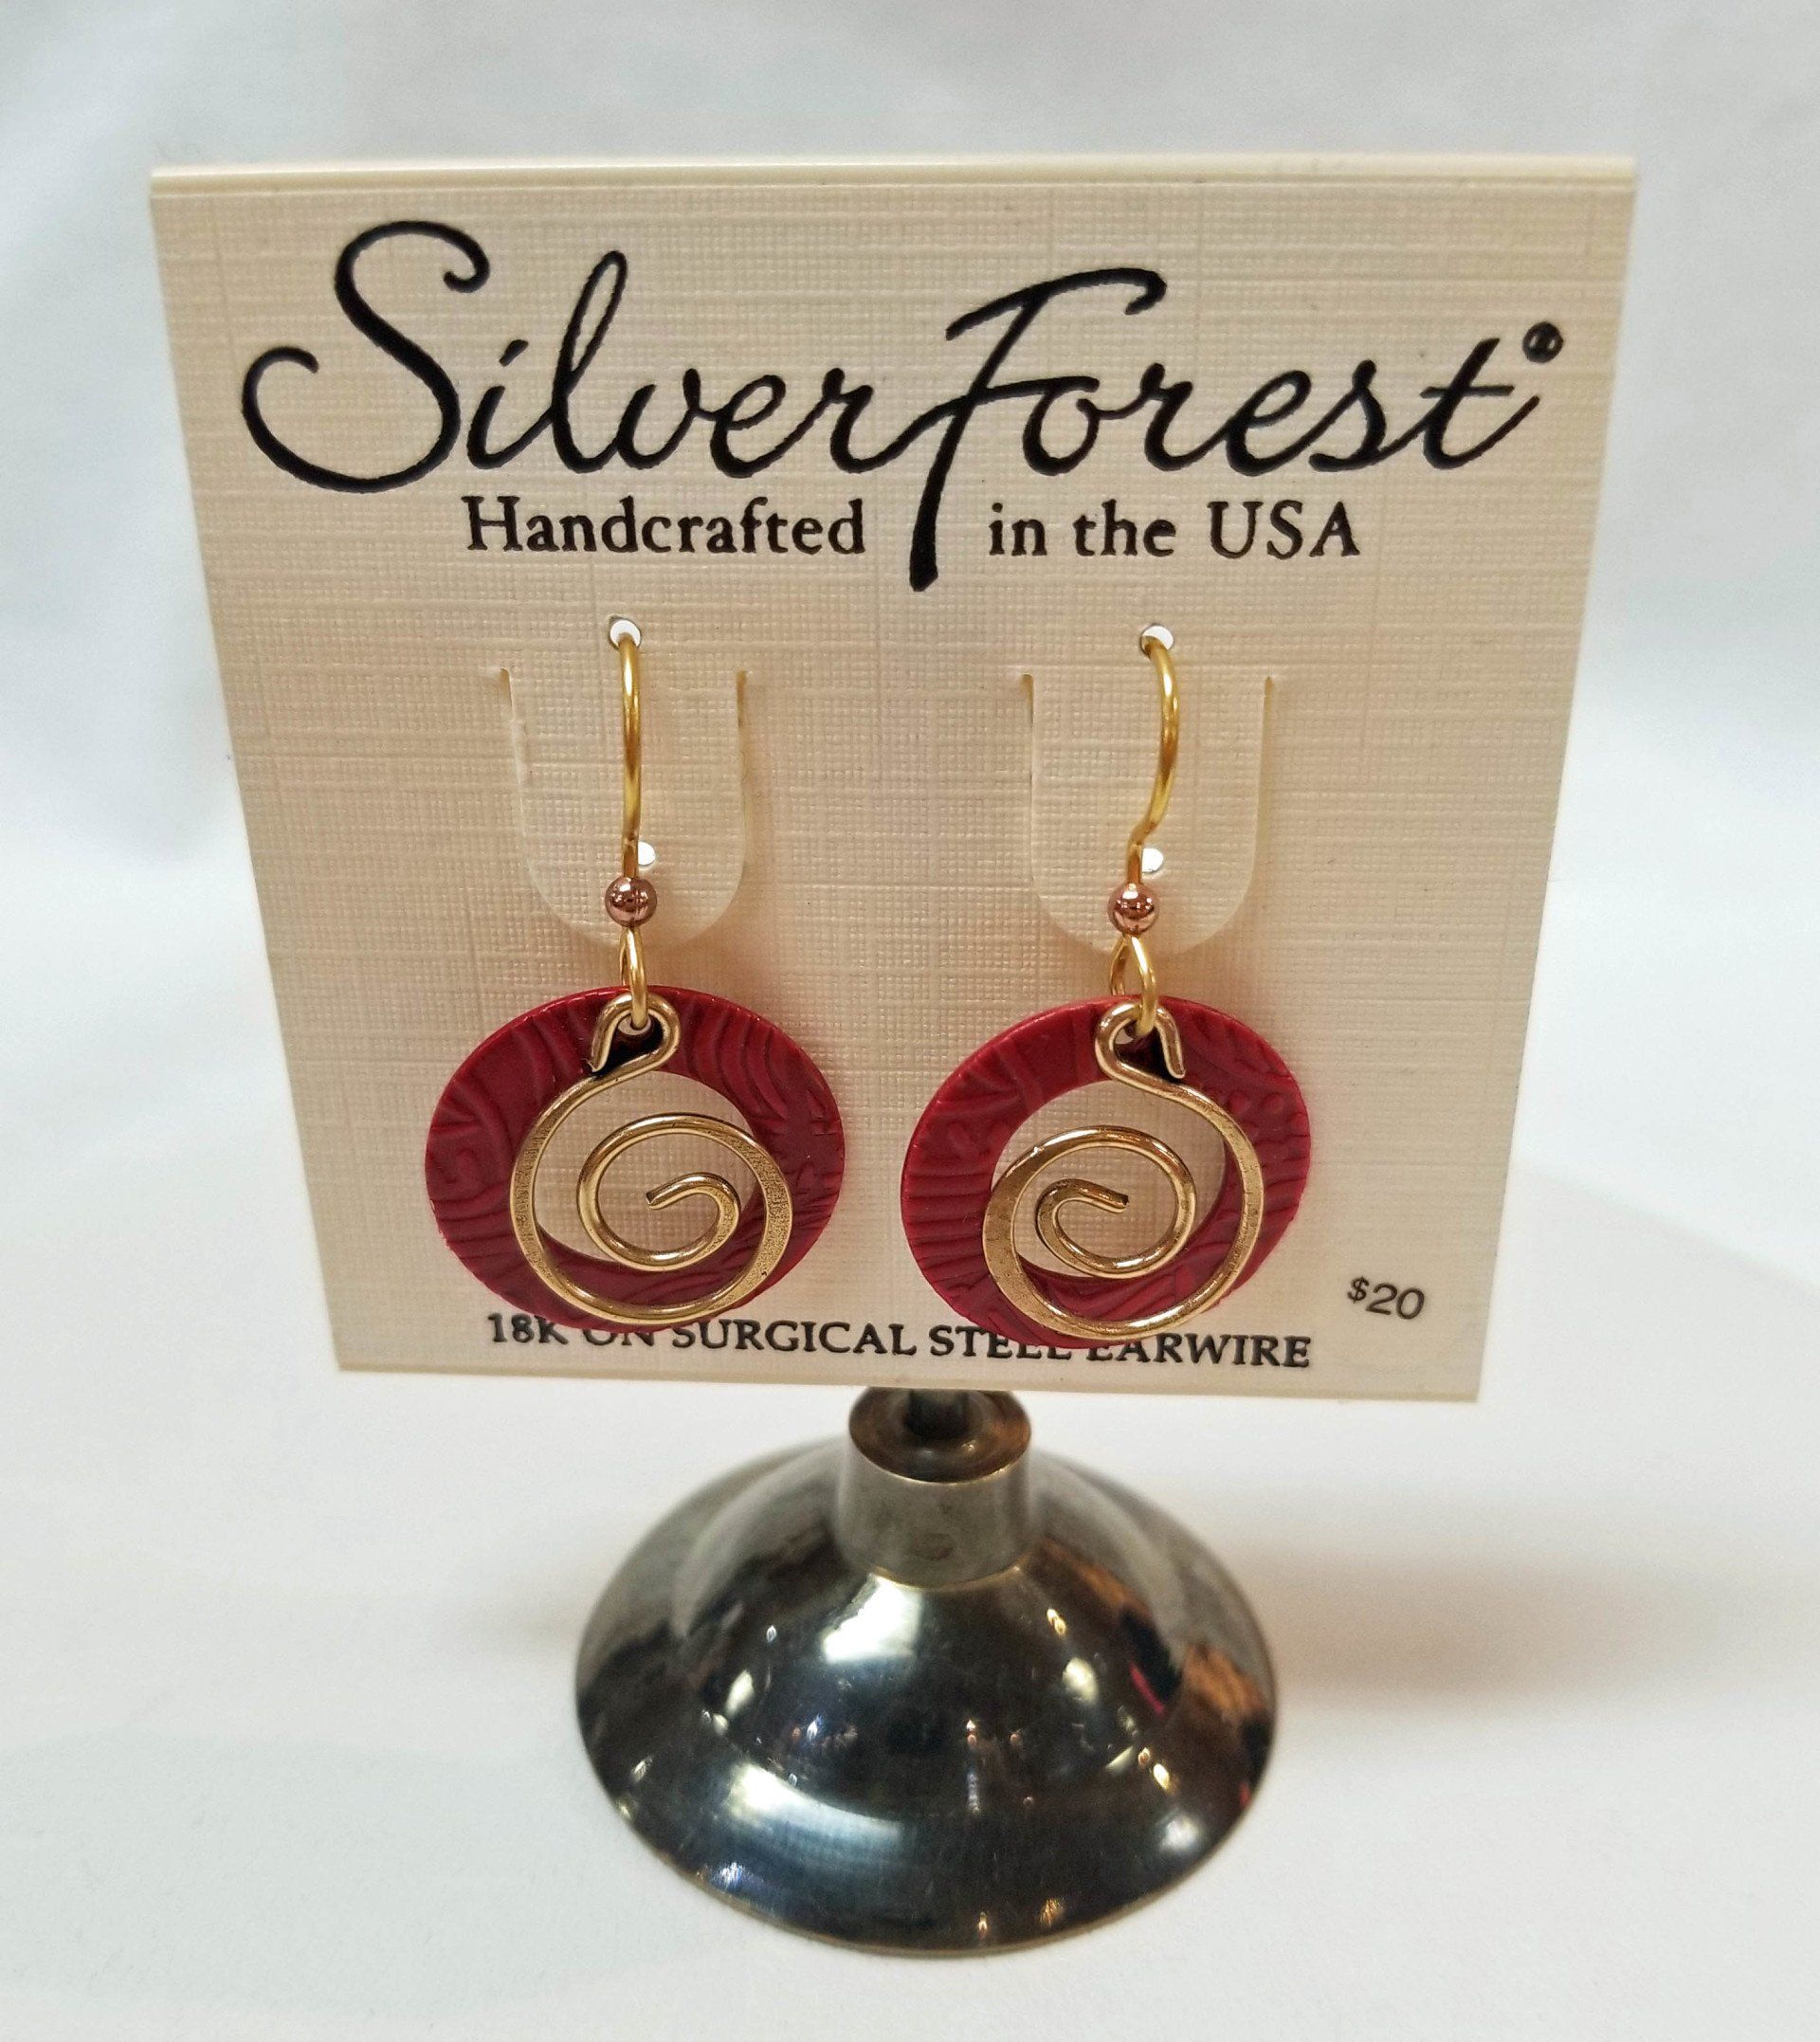 Copy+of+silver+forest+red+earring-1920w.jpg